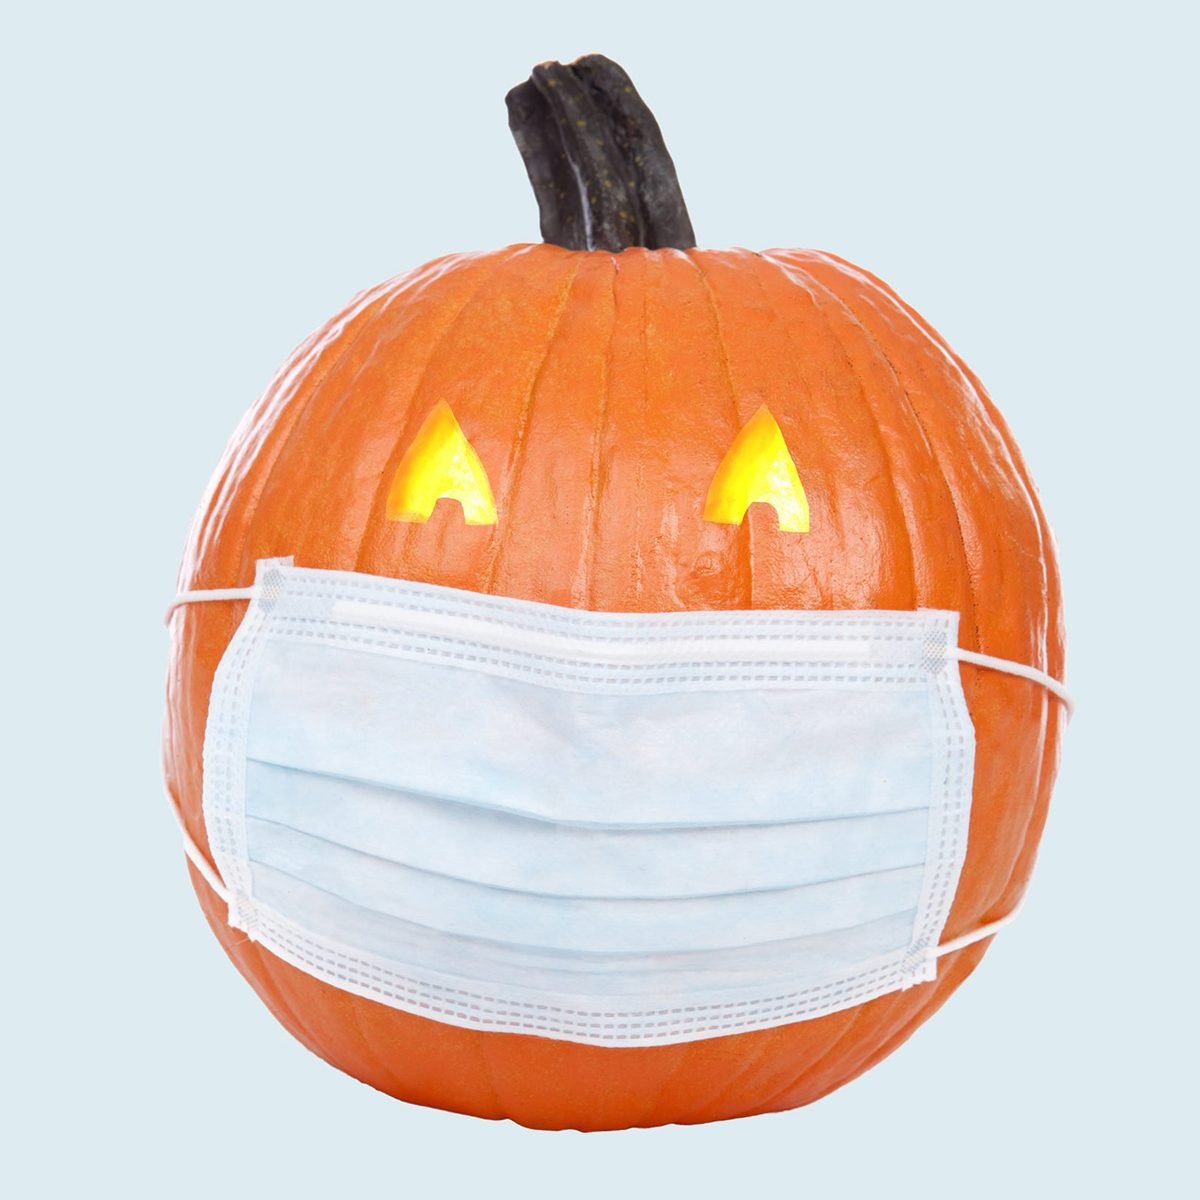 Jack-o-lantern wearing a face mask